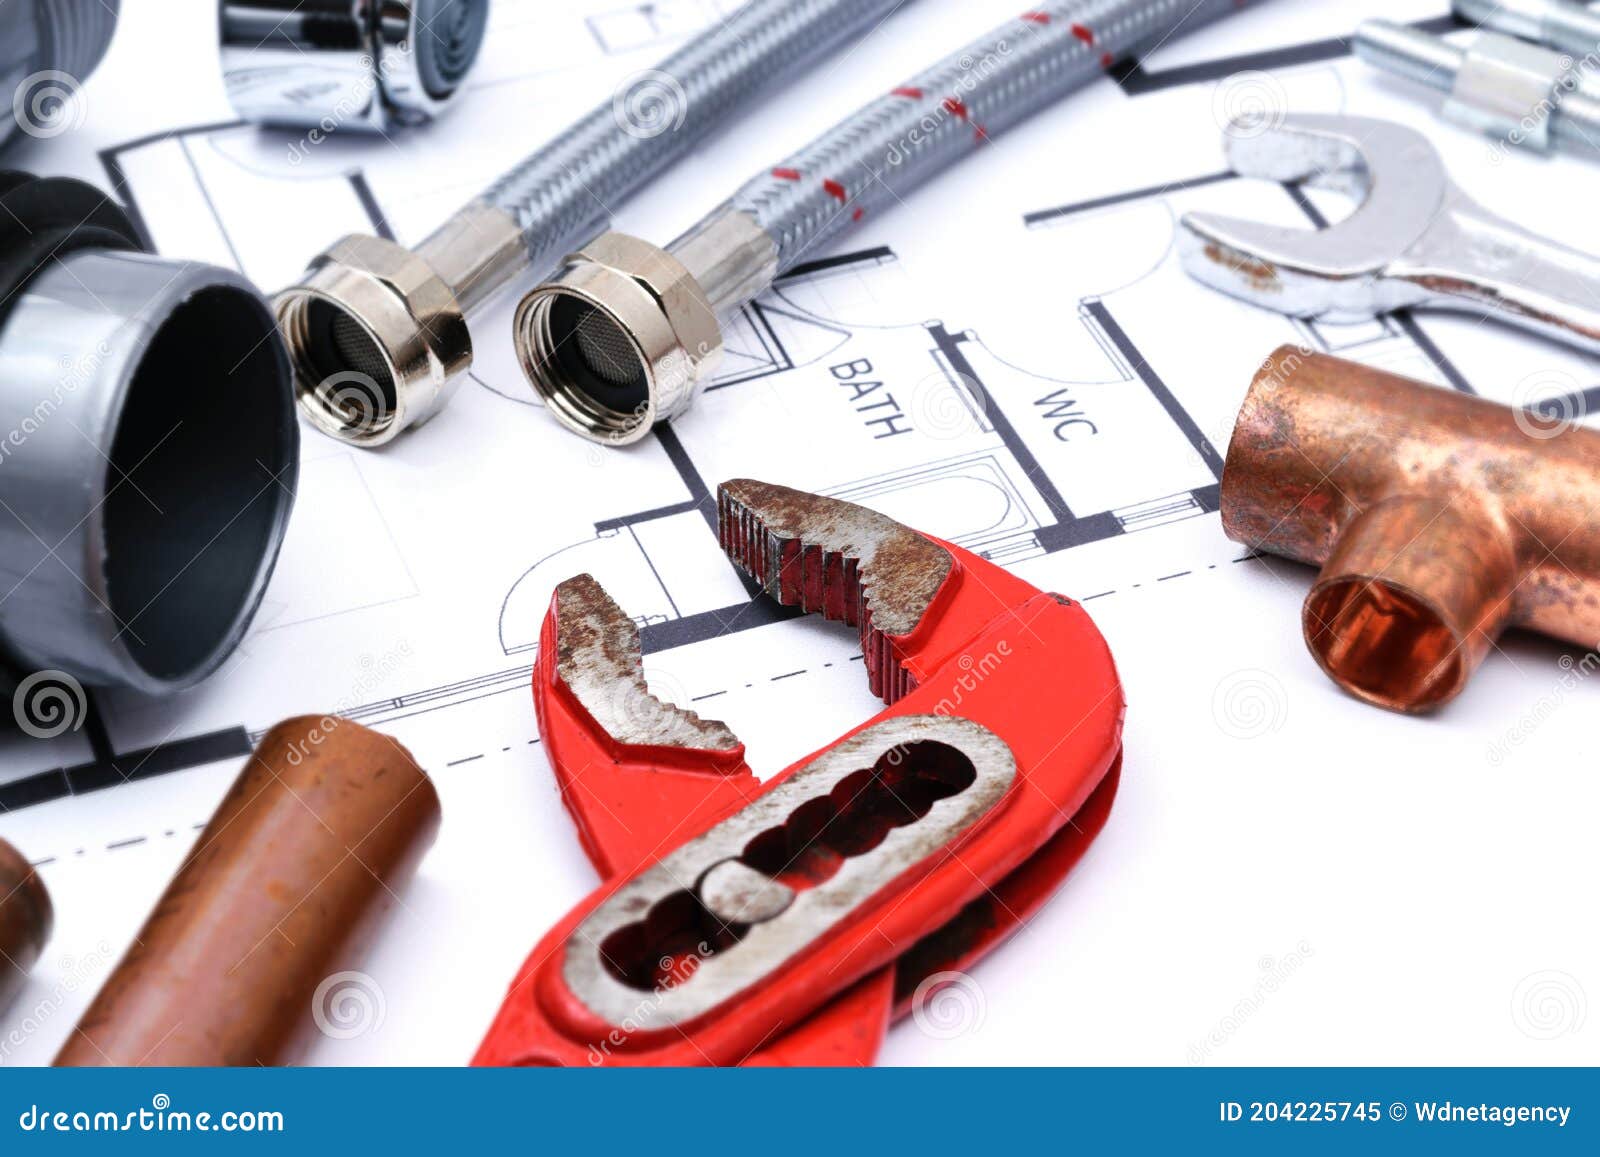 Plumbing Equipment on a House Plan Stock Image Image of mechanical